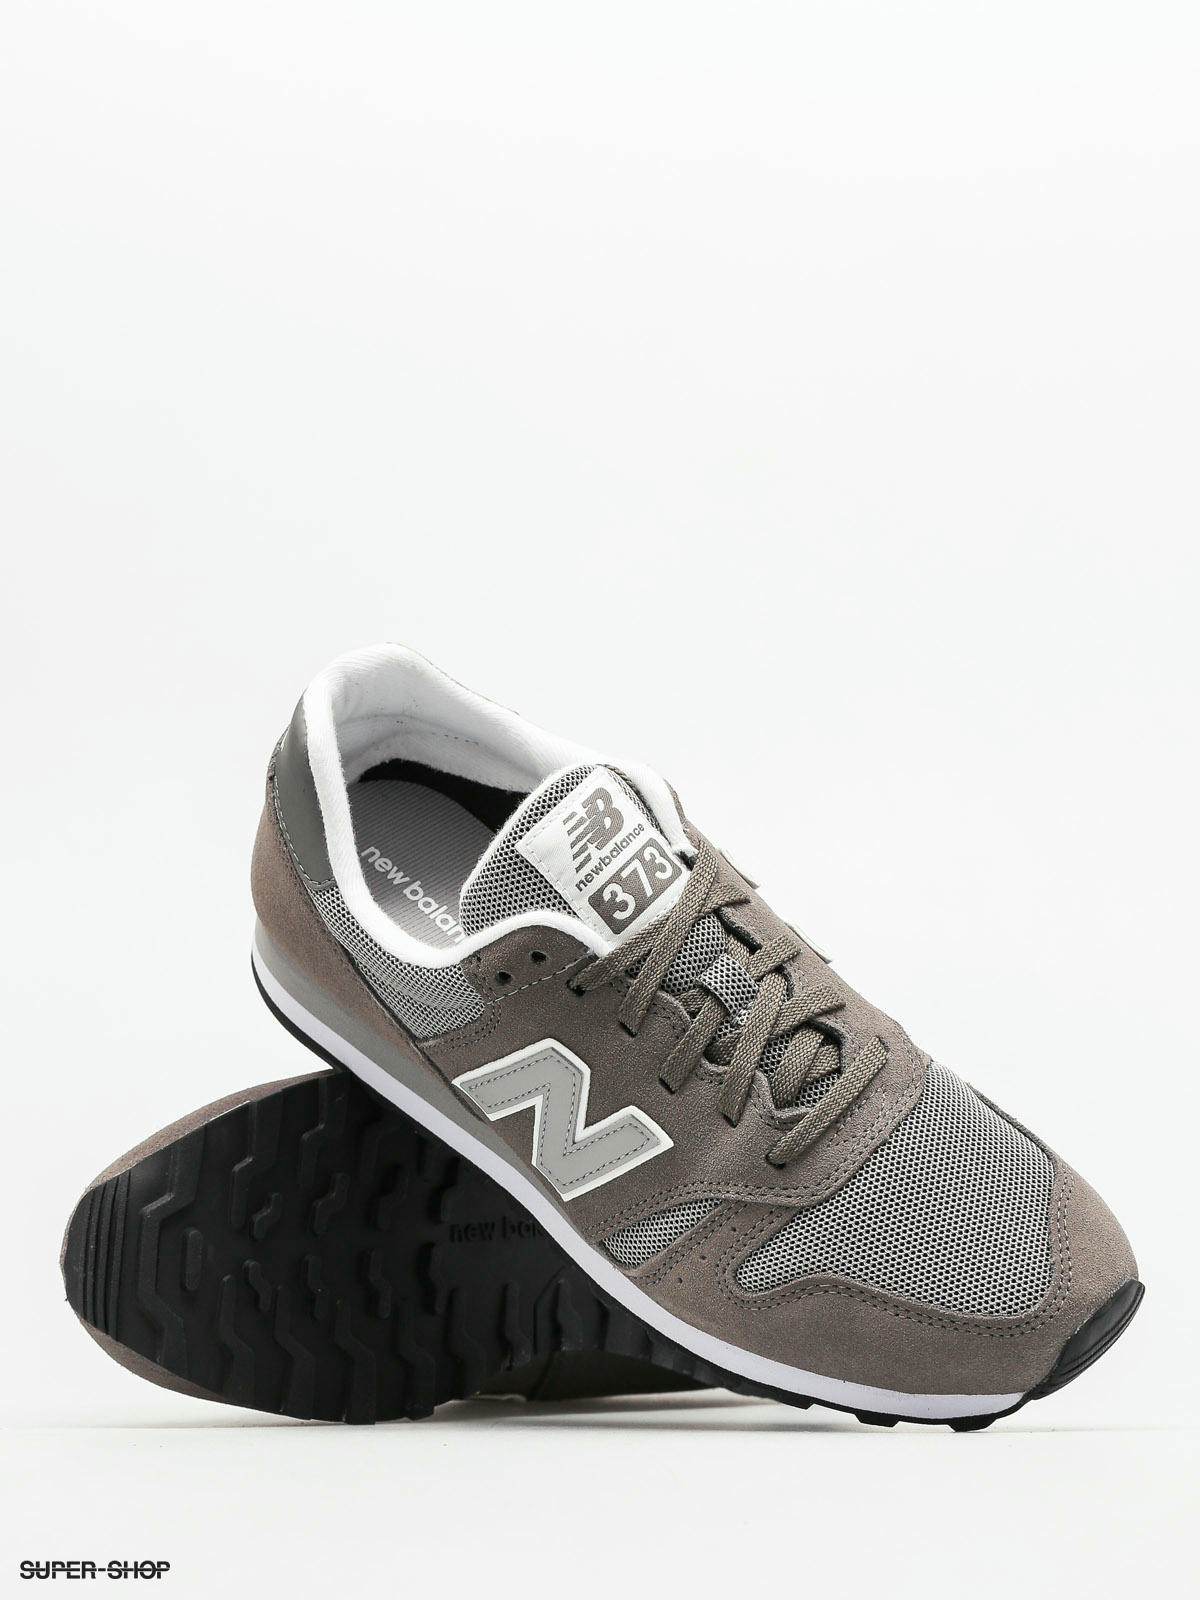 New Balance Shoes 373 (mma)